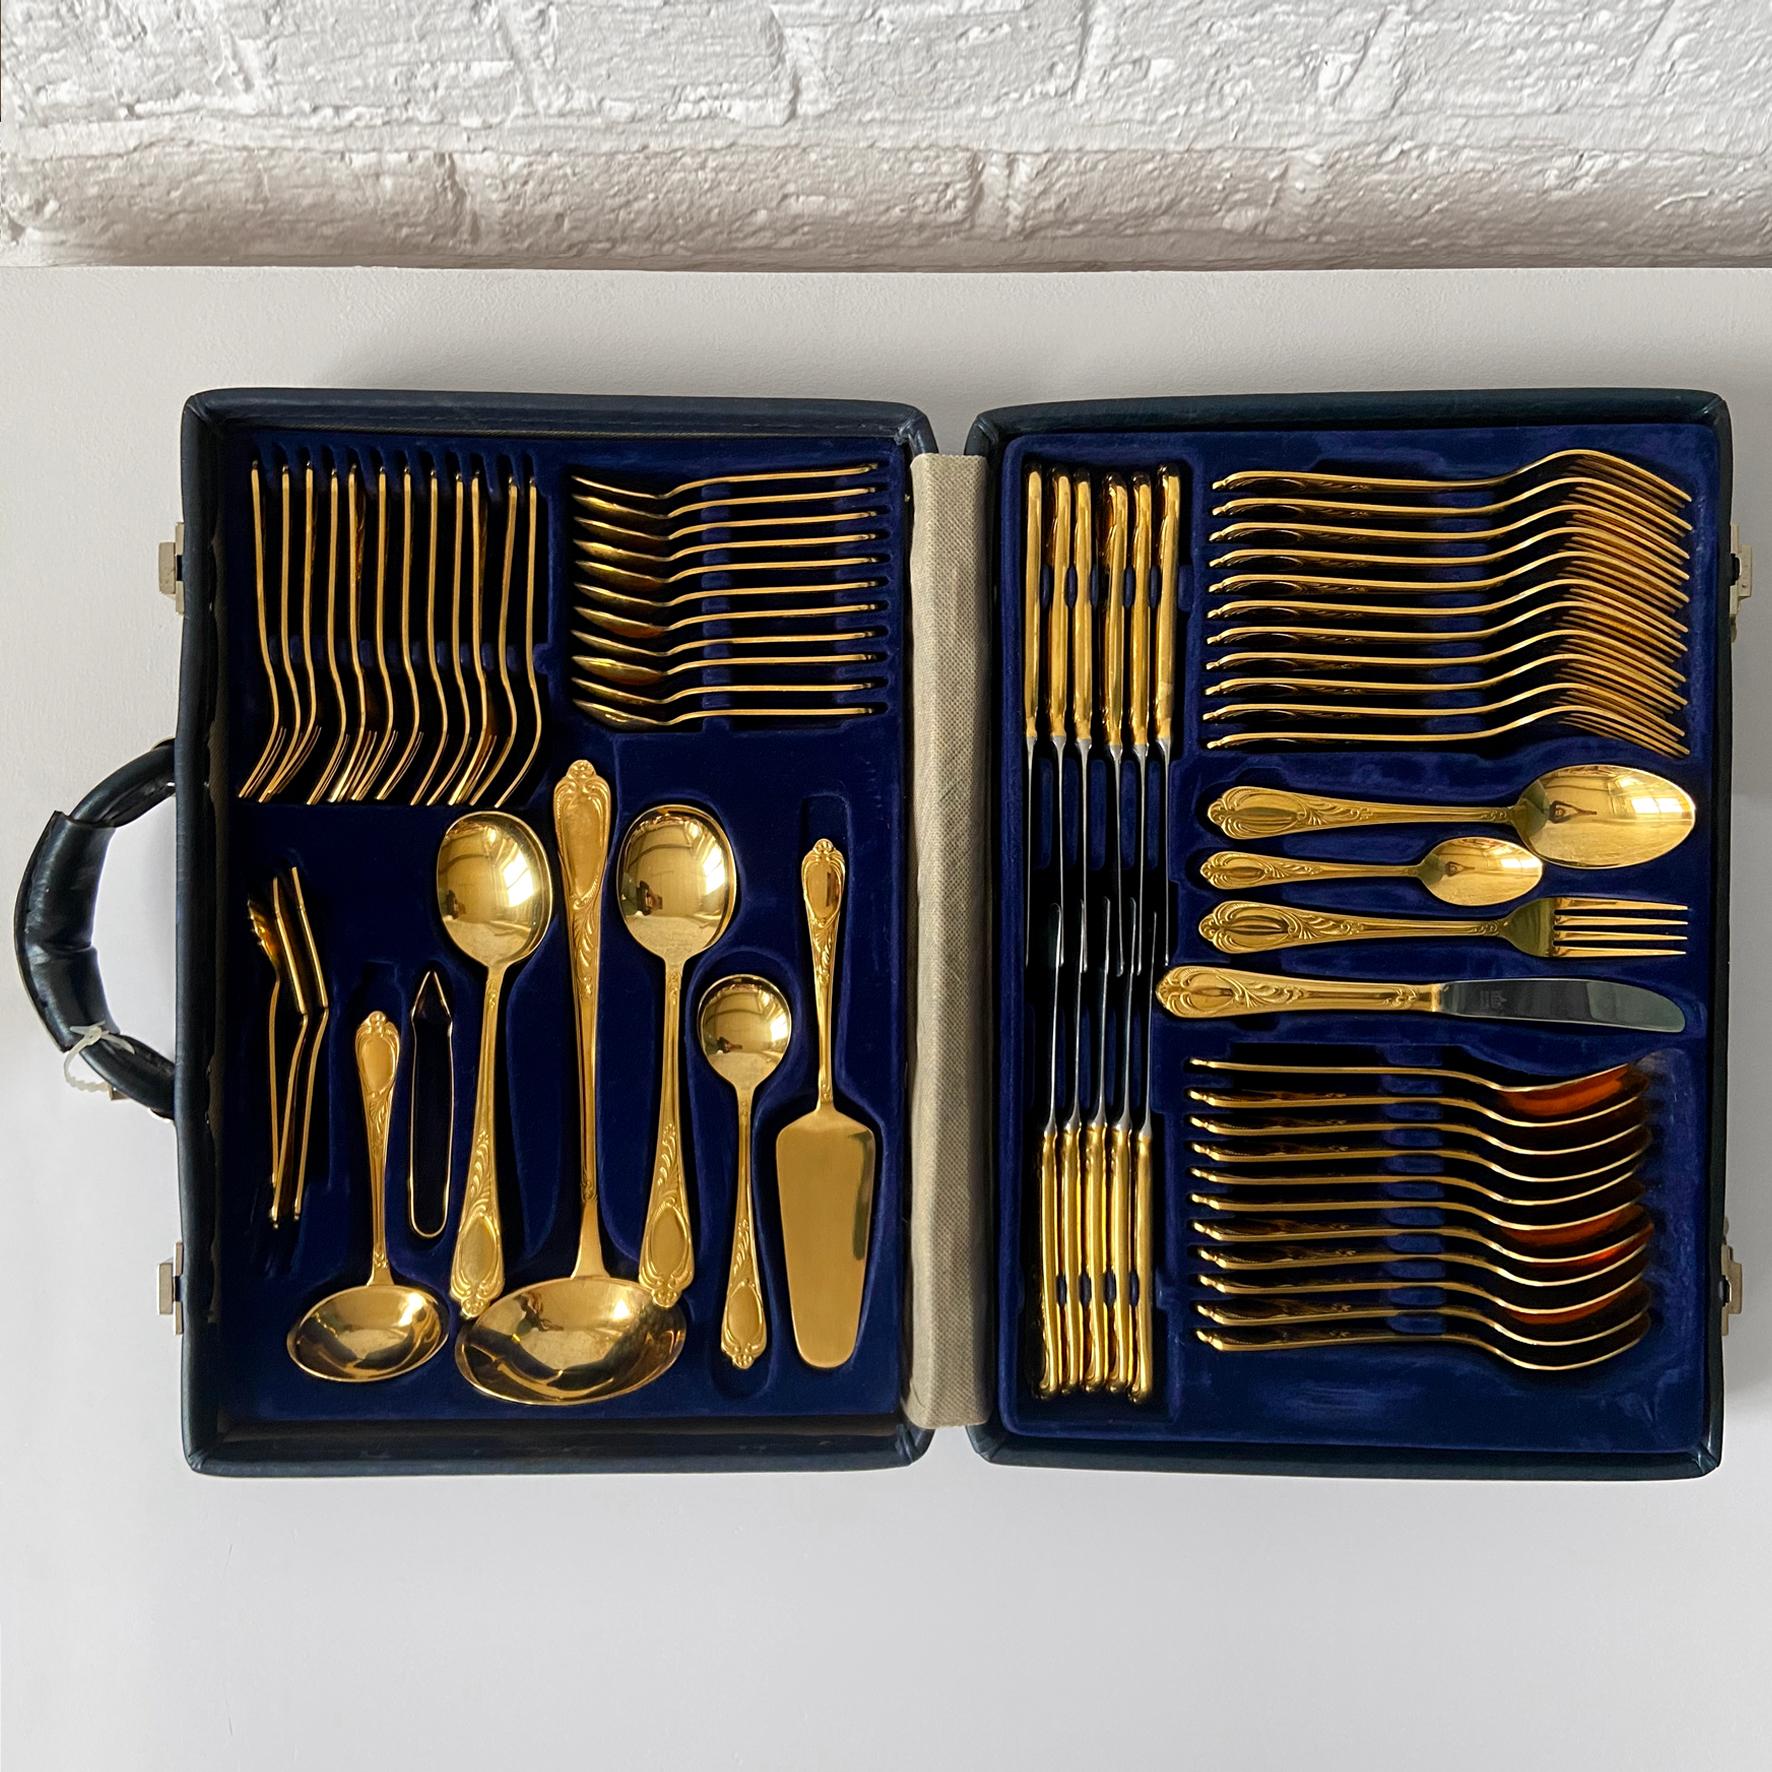 bestecke solingen 23/24 karat gold plated cutlery price